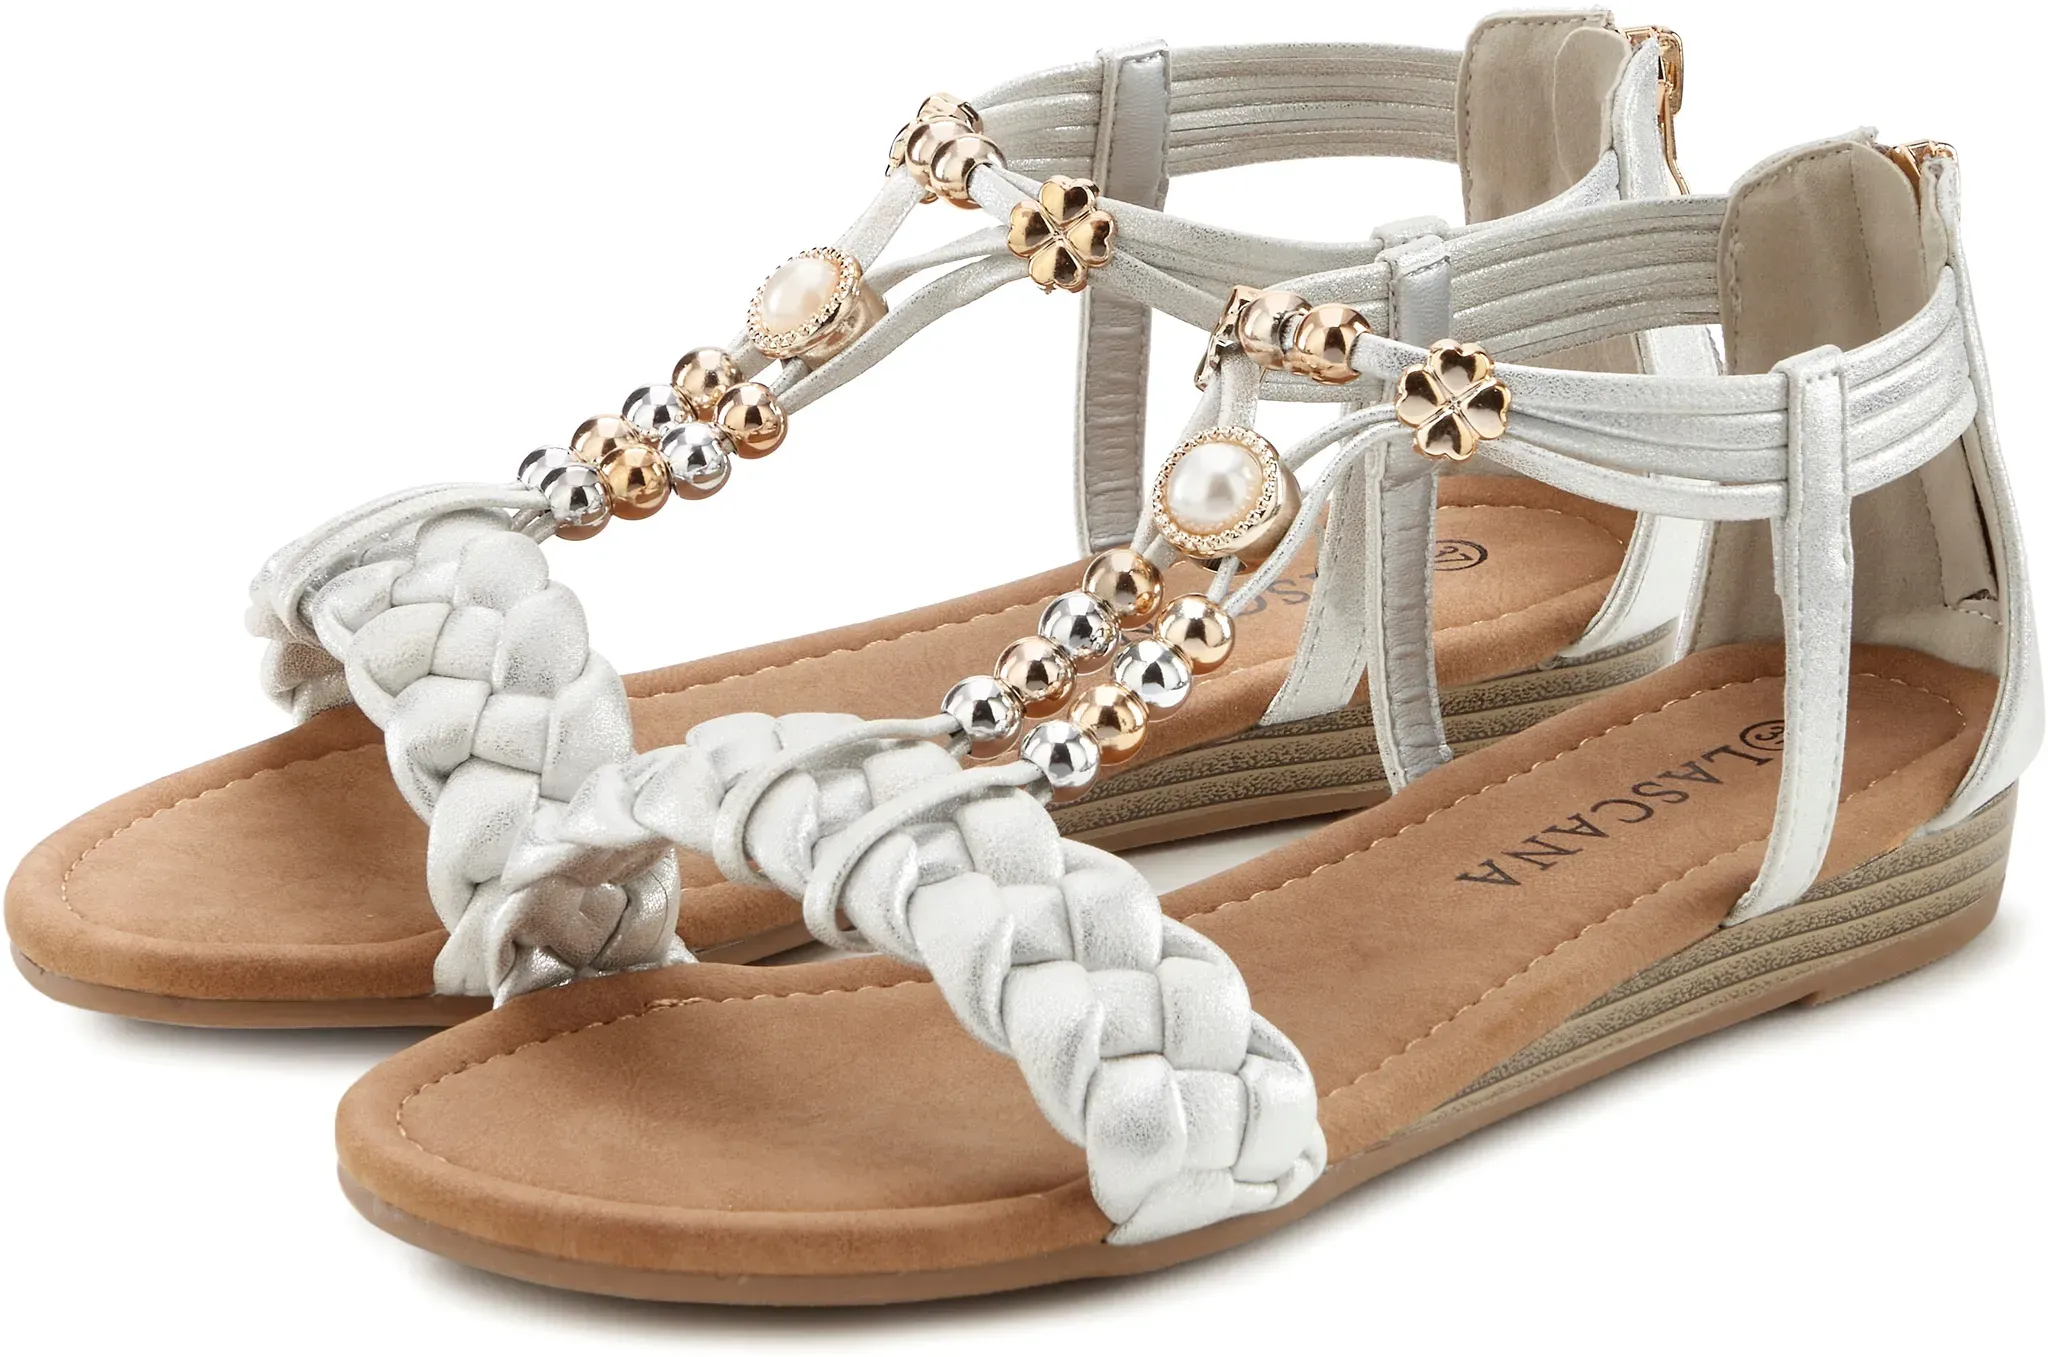 Sandale LASCANA Gr. 37, grau (hellgrau) Damen Schuhe Lascana Sandalette, Sommerschuh mit raffiniertem Riemchen VEGAN